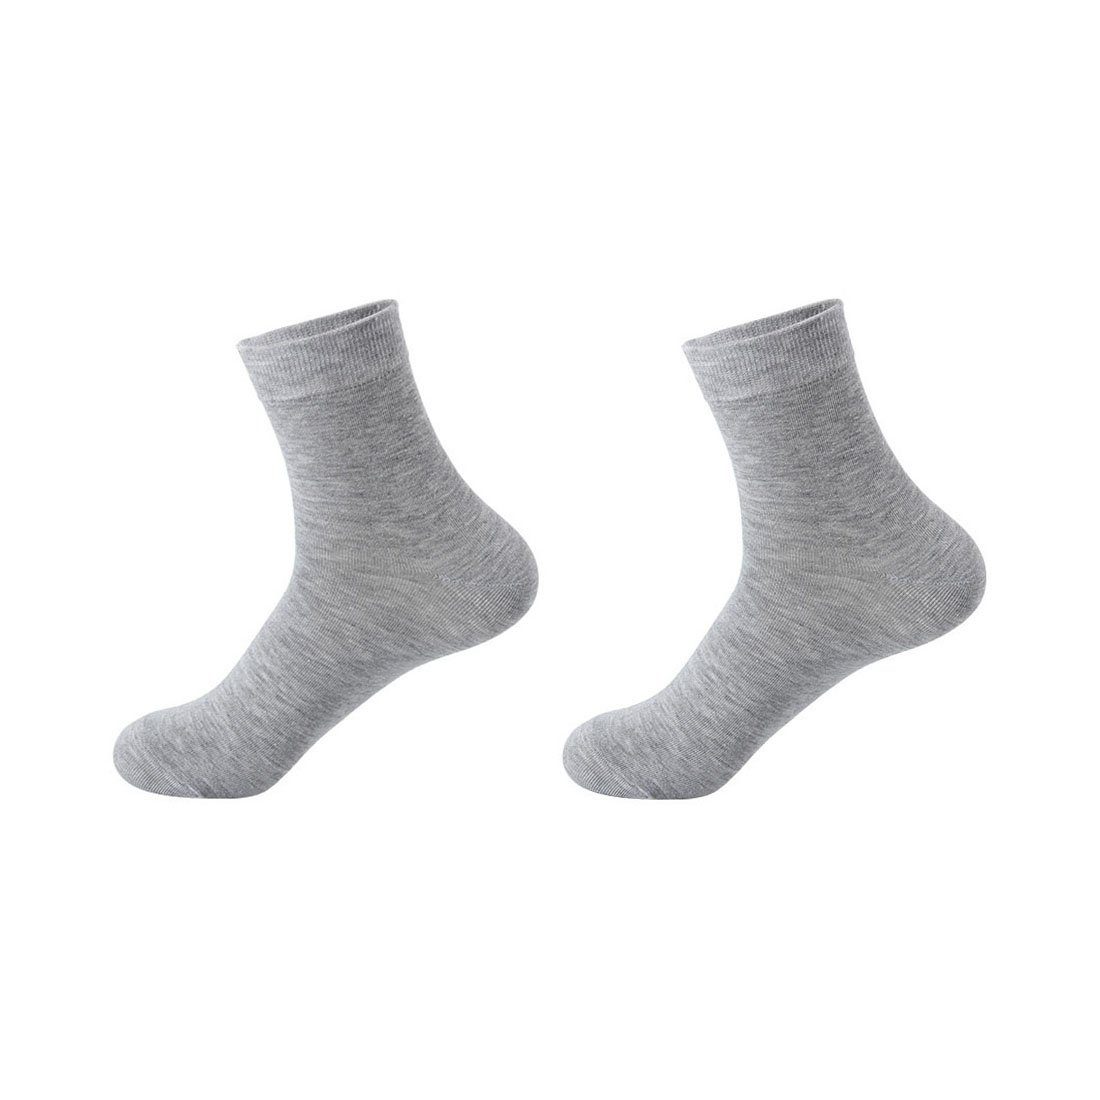 Damen gekämmte GelldG Premium Socken Socken Business Herren Strümpfe Grau